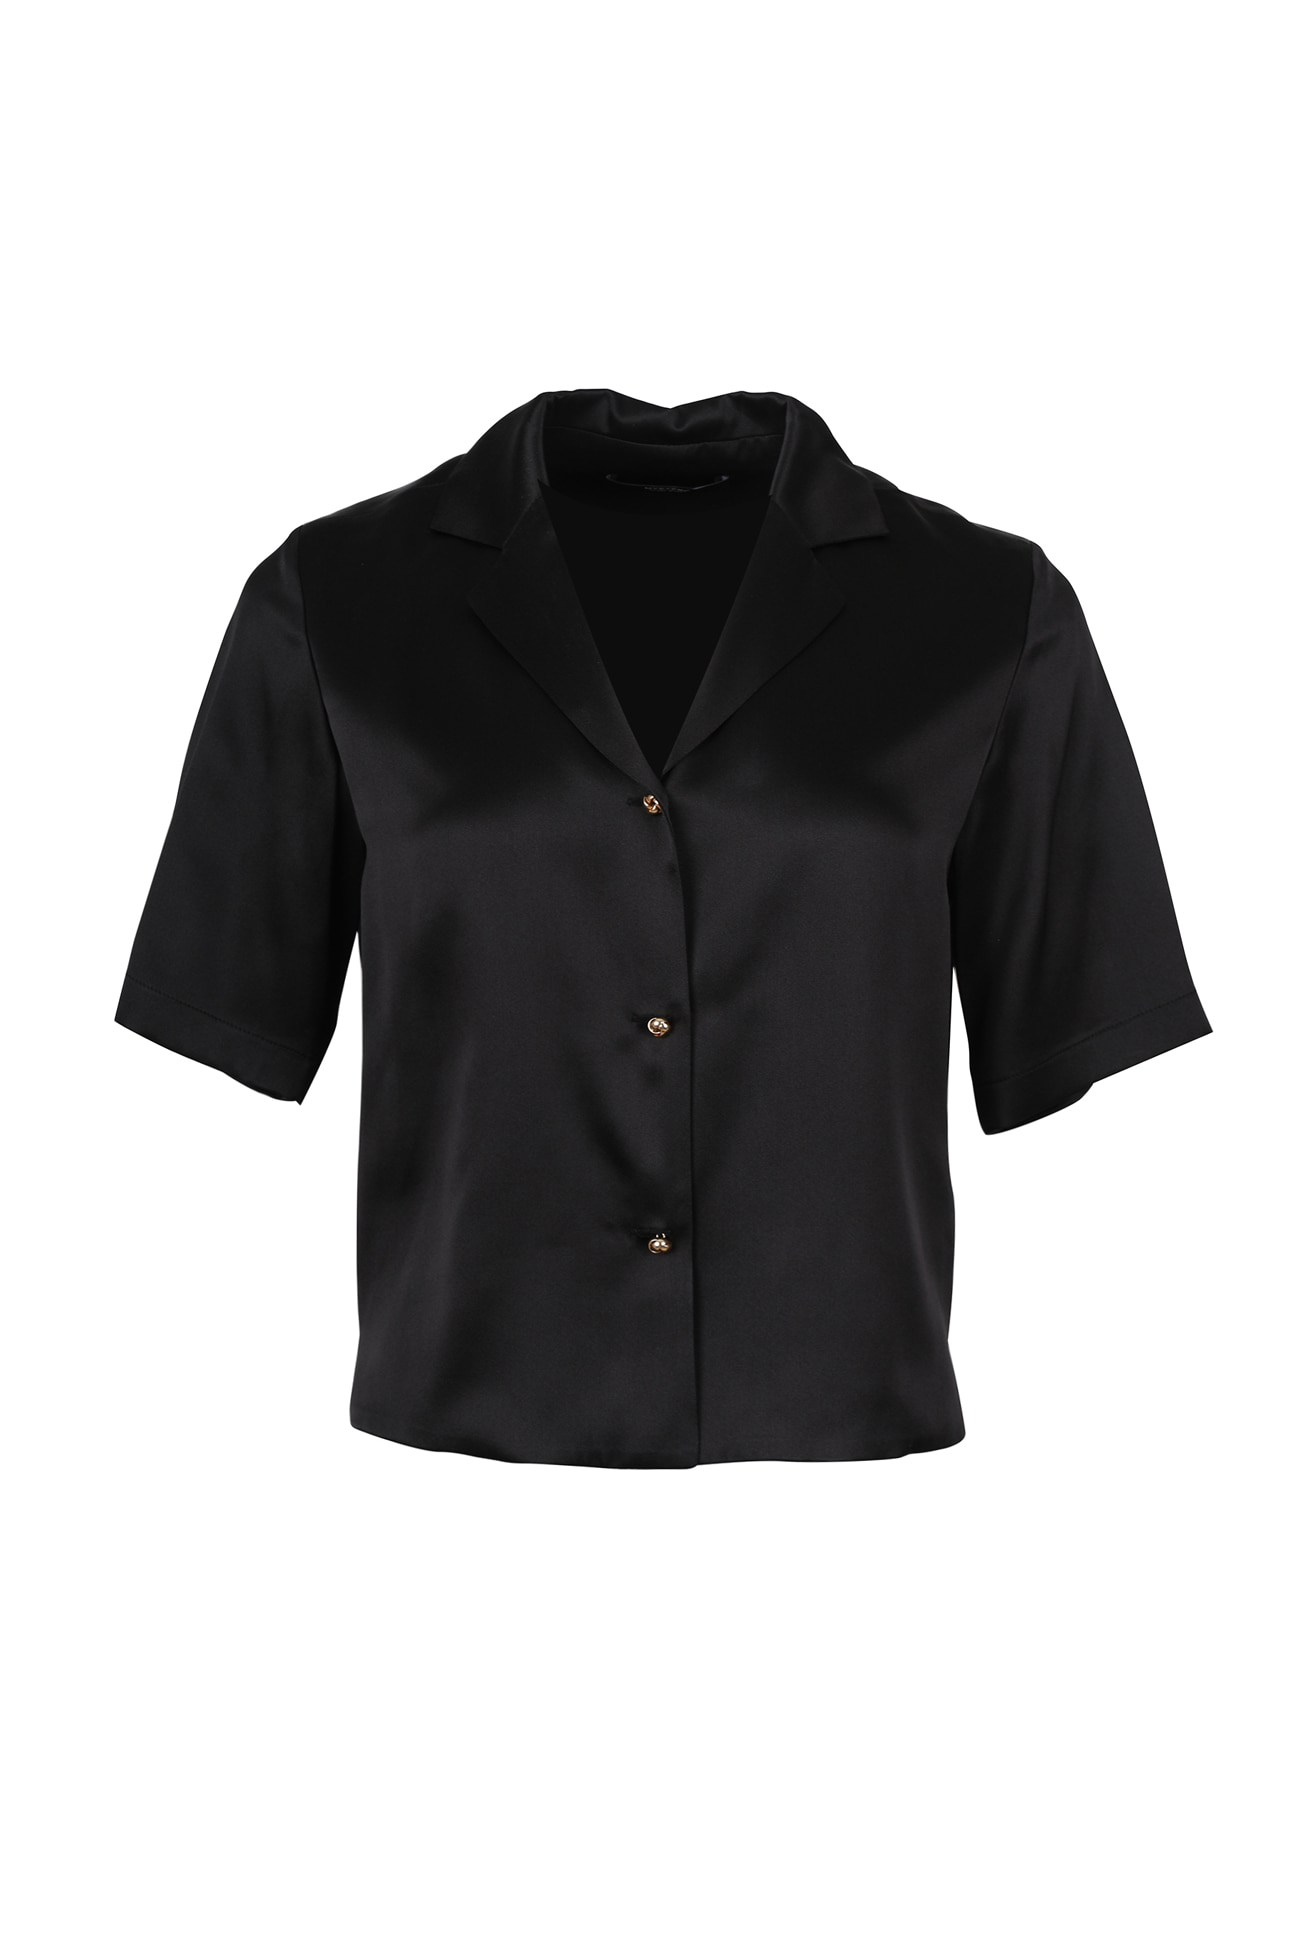 HIGH QUALITY LINE -  Black Silk Shirts (Silk 100%)